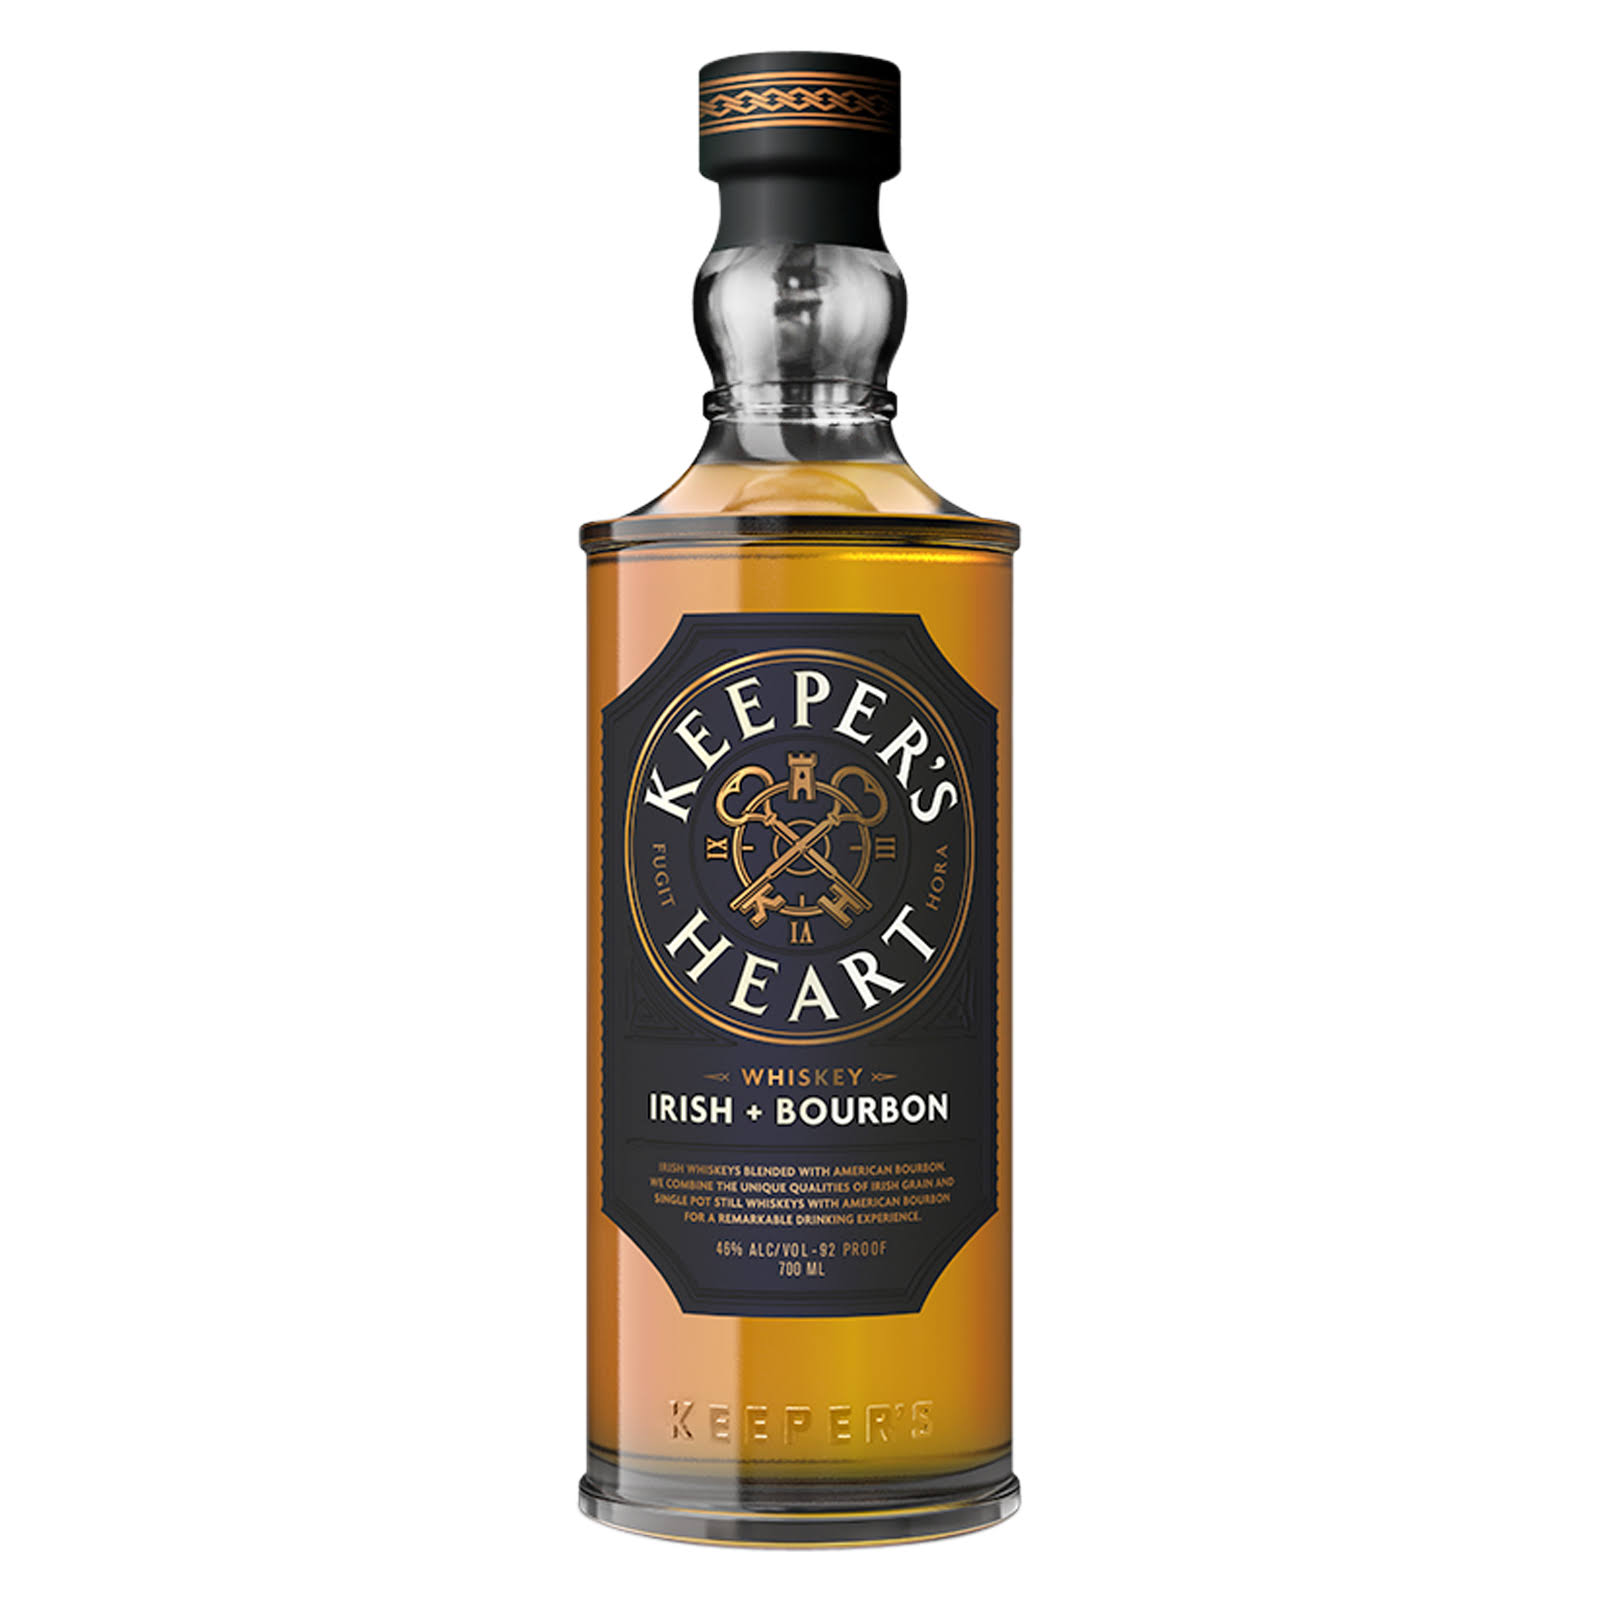 Keeper's Heart Irish + Bourbon Whiskey - 700 ml